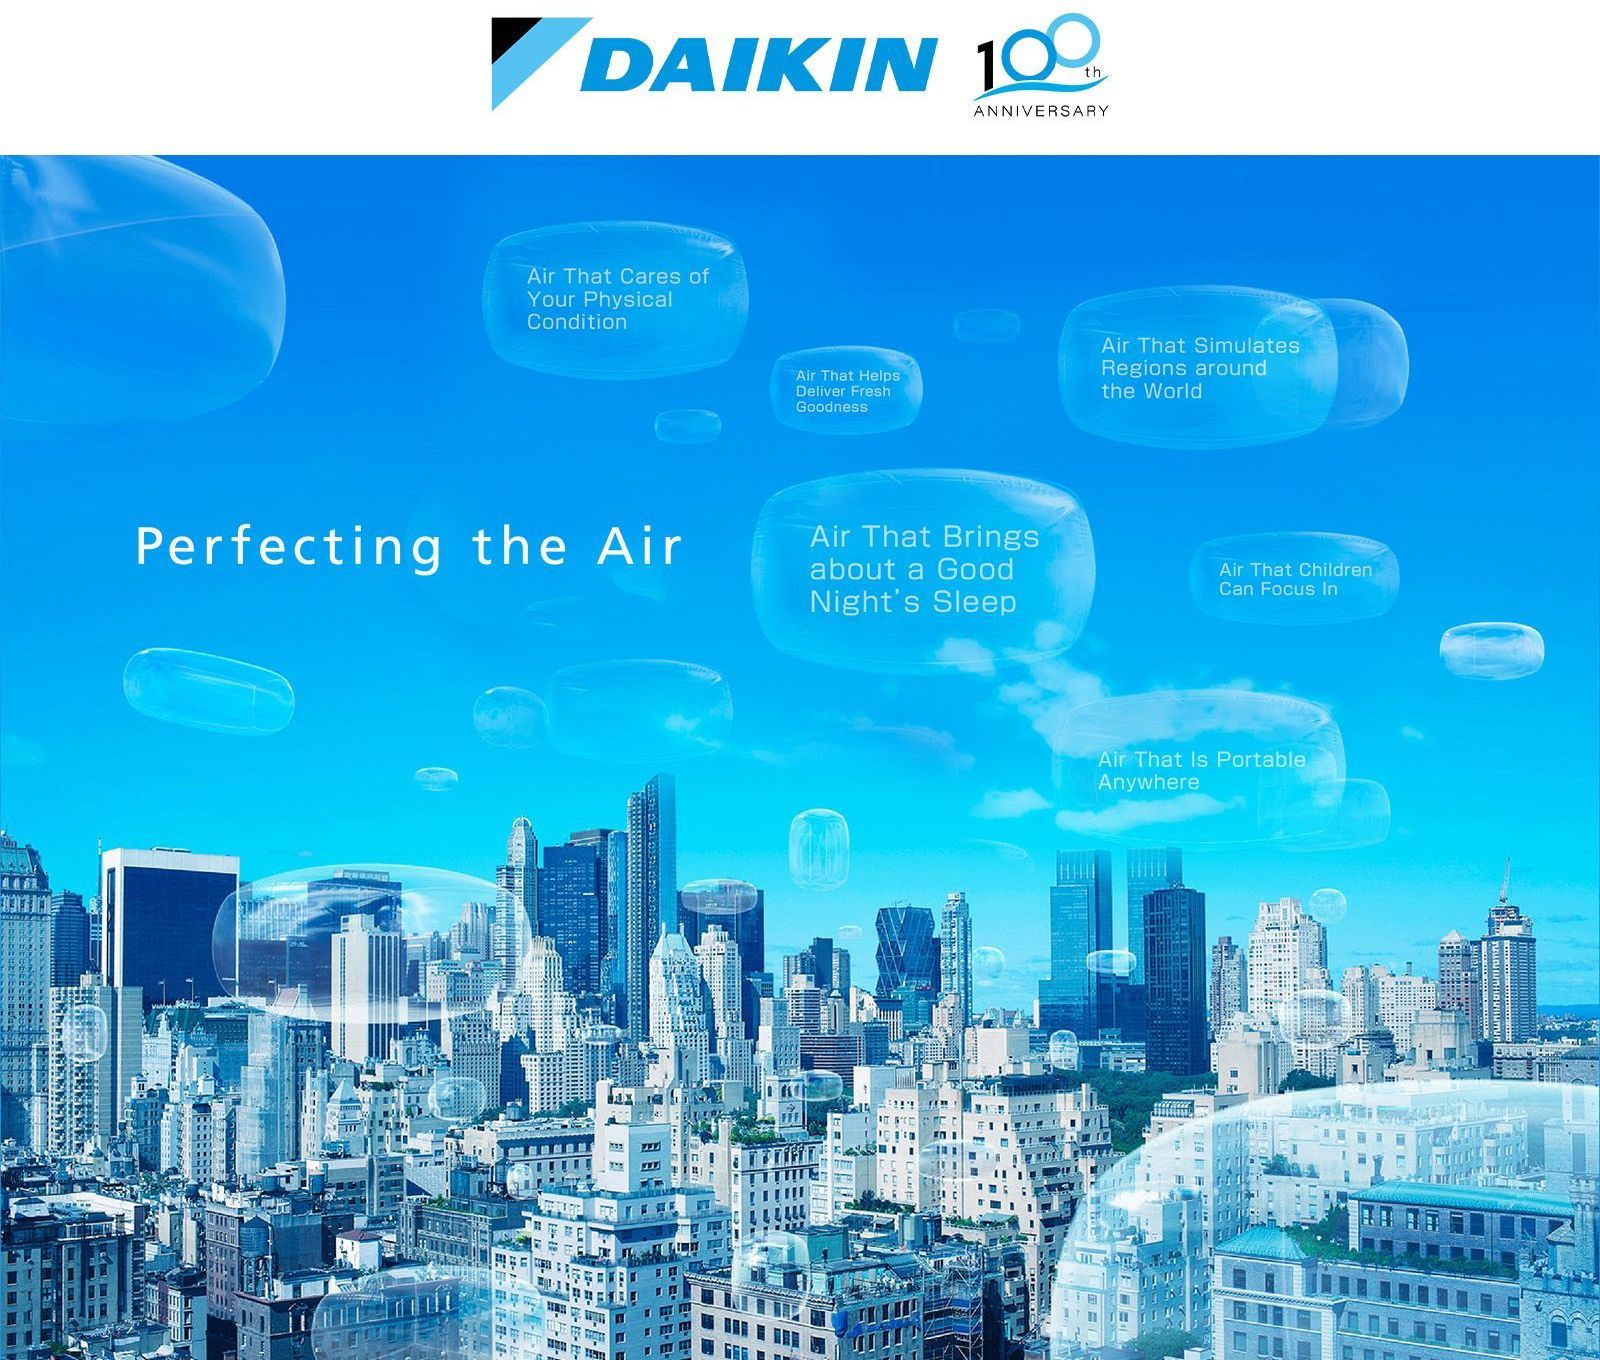 Daikin 100 Year Anniversary - Perfecting the Air